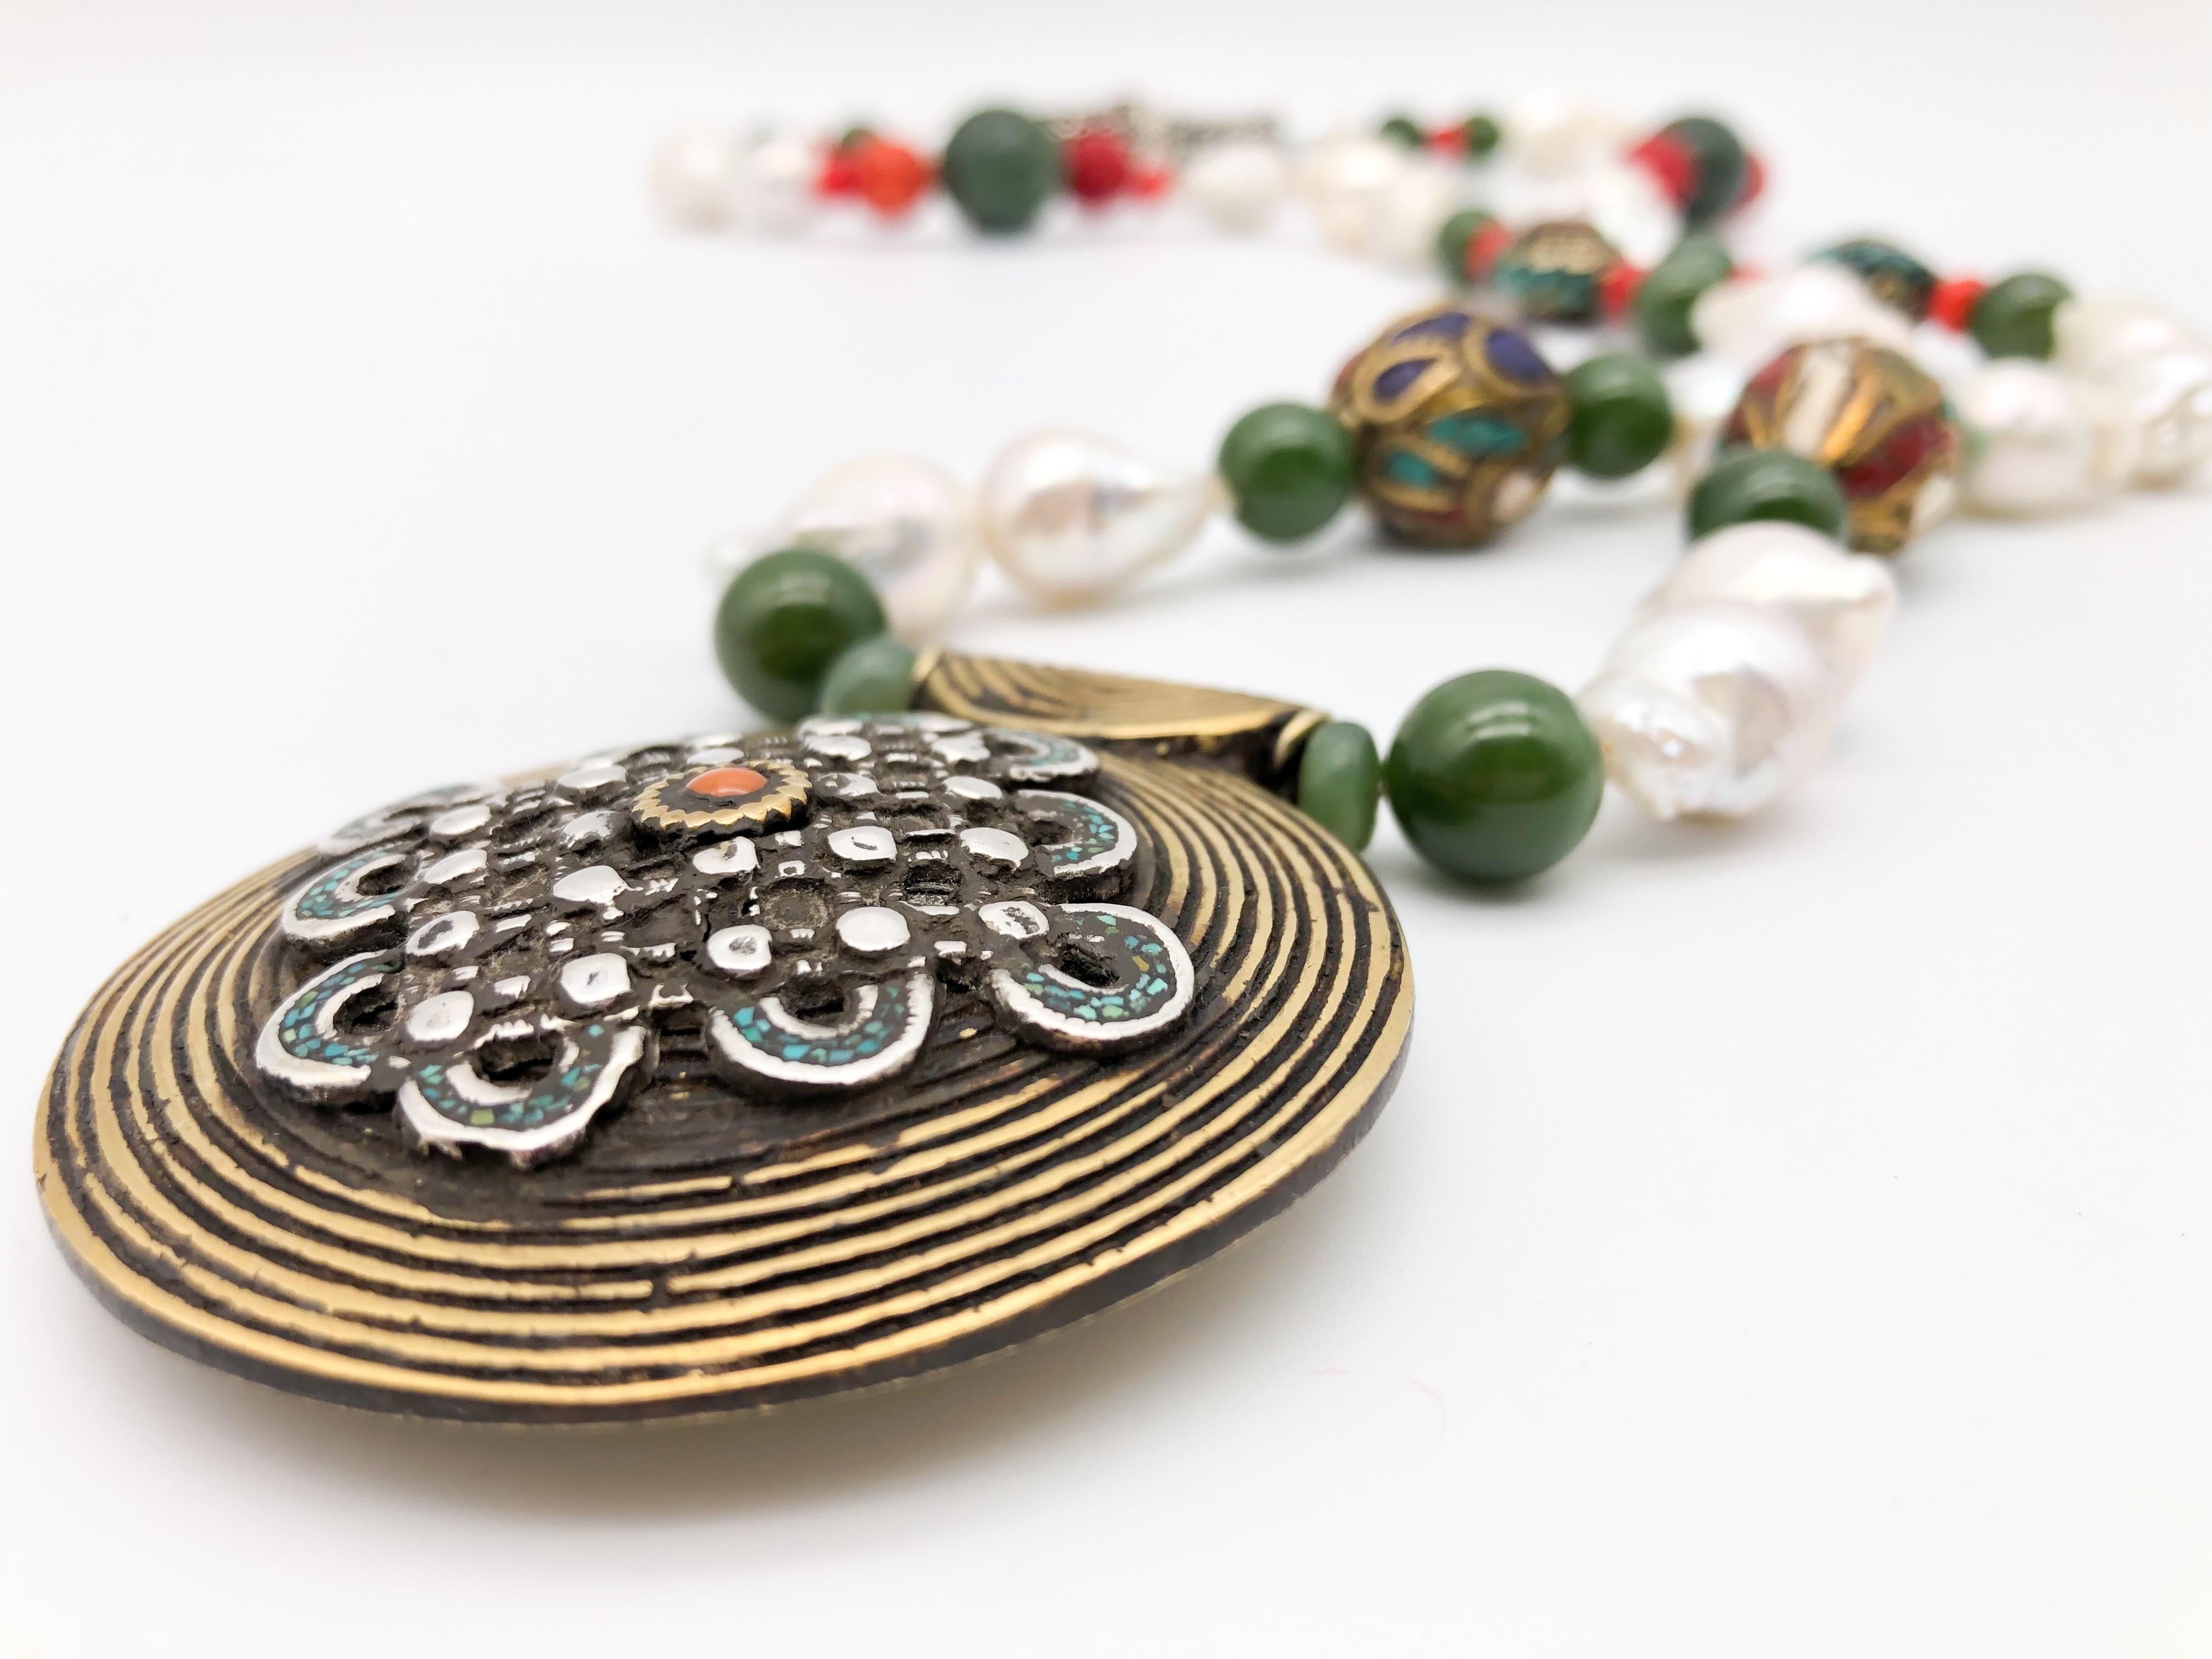 A.Jeschel Splendid Tibetan Pendant on Lustrous Baroque Pearl Necklace For Sale 2